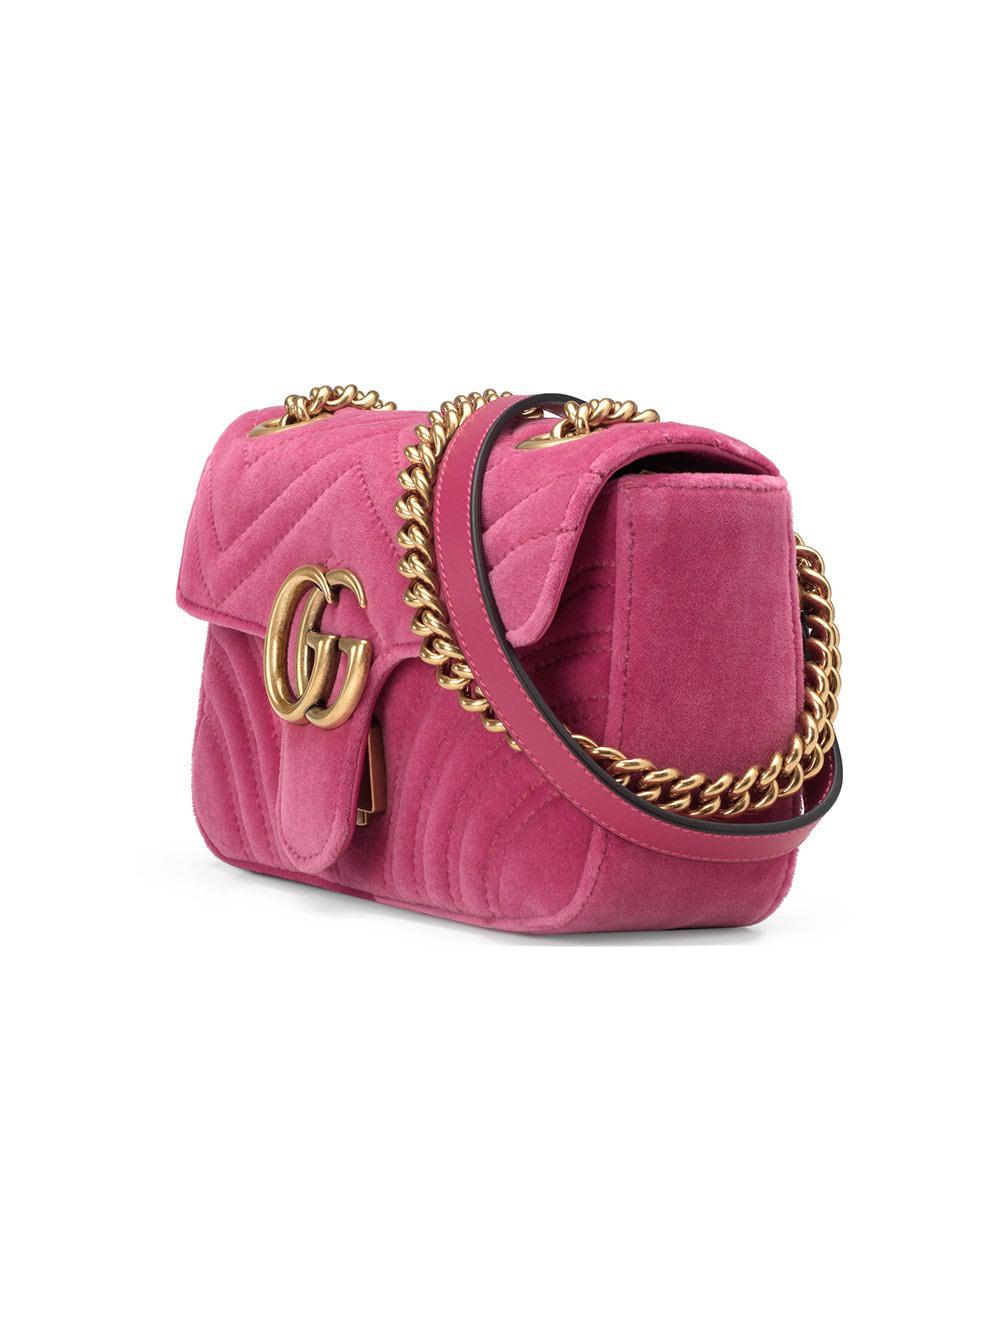 GG Marmont small shoulder bag in dark pink velvet